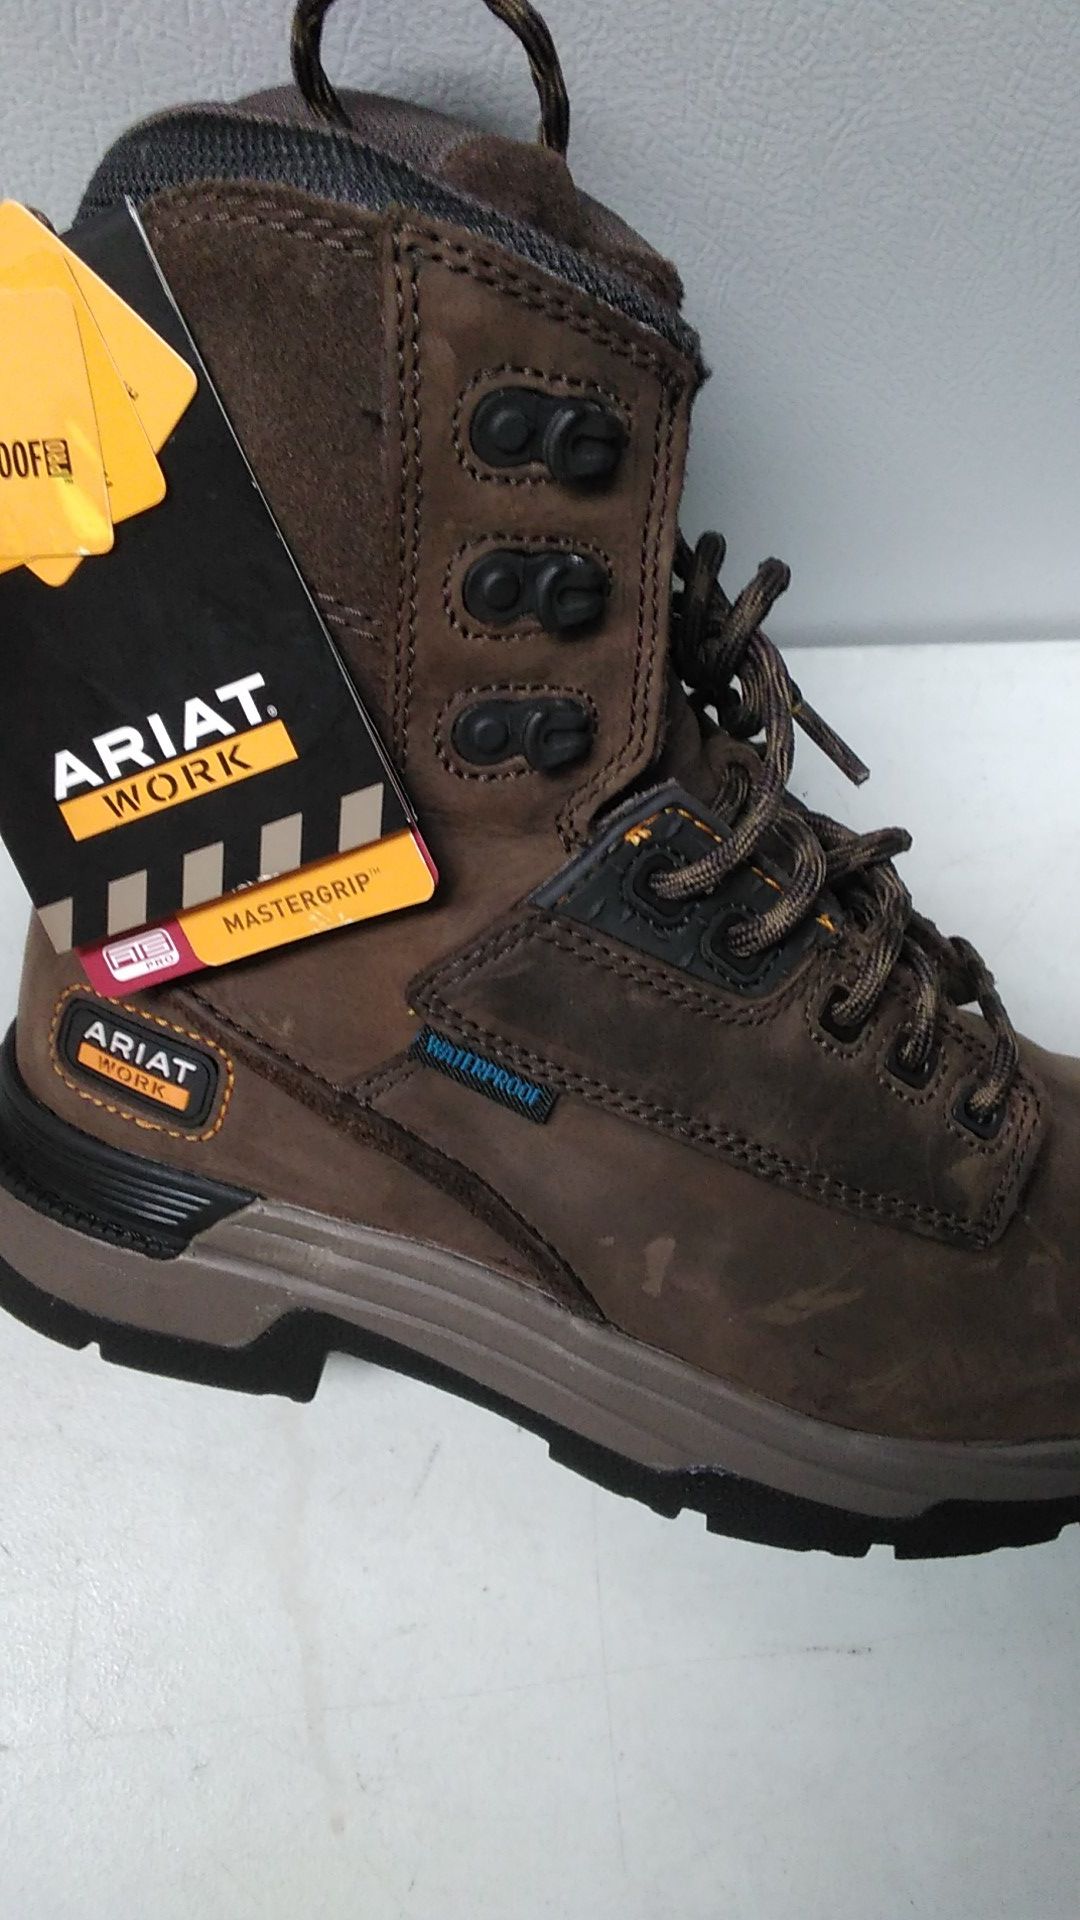 Ariat boots $120